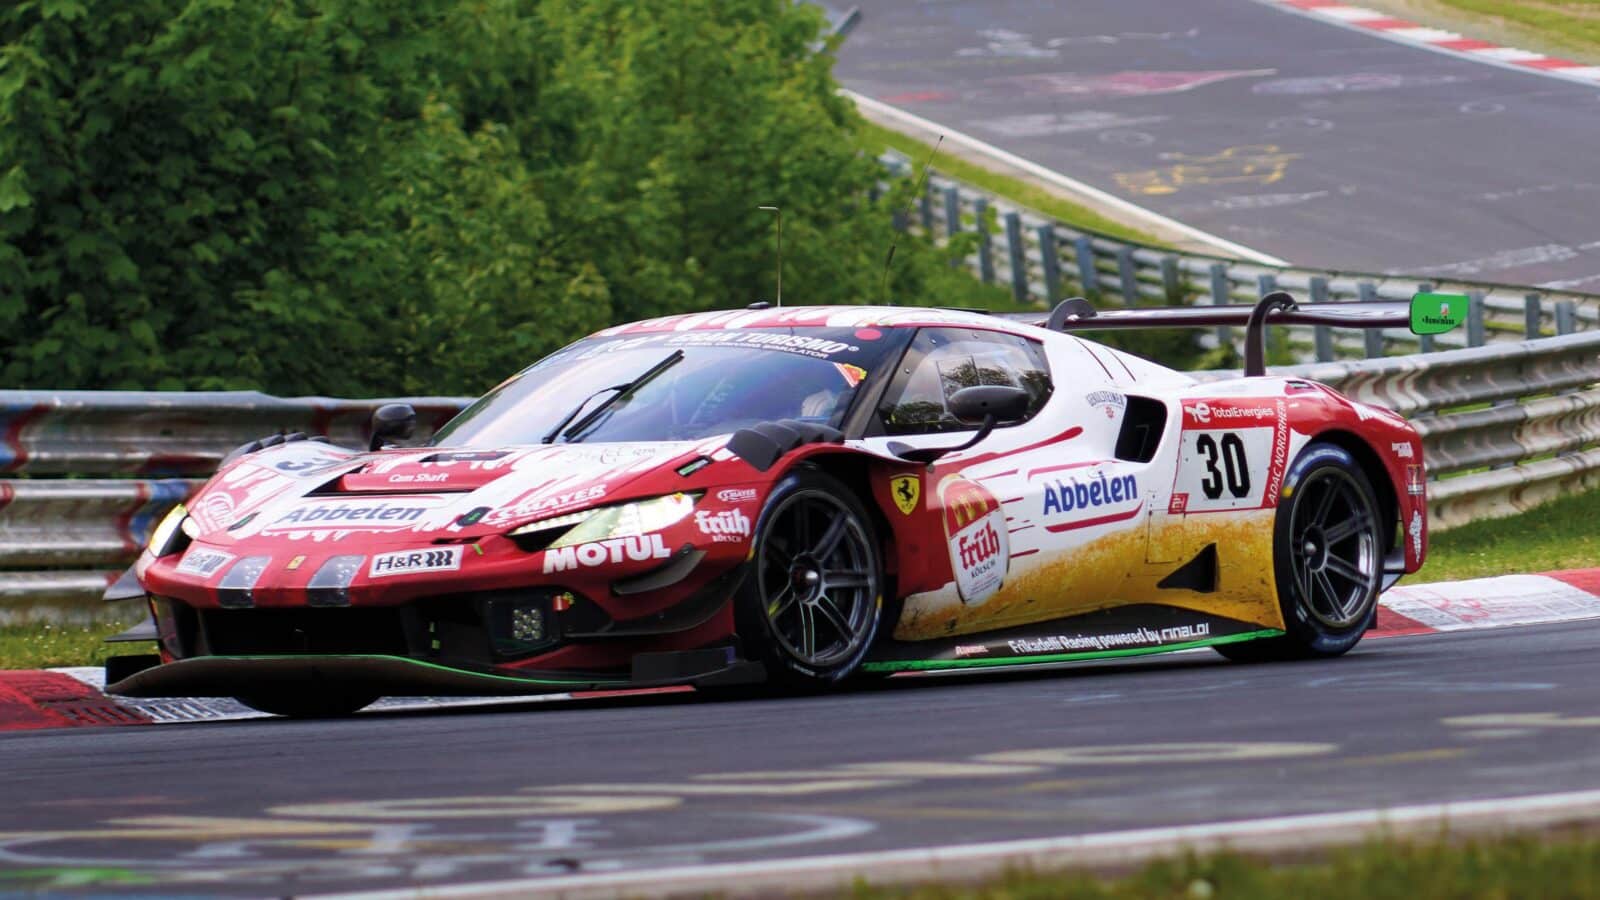 Frikadelli’s Ferrari pre-race